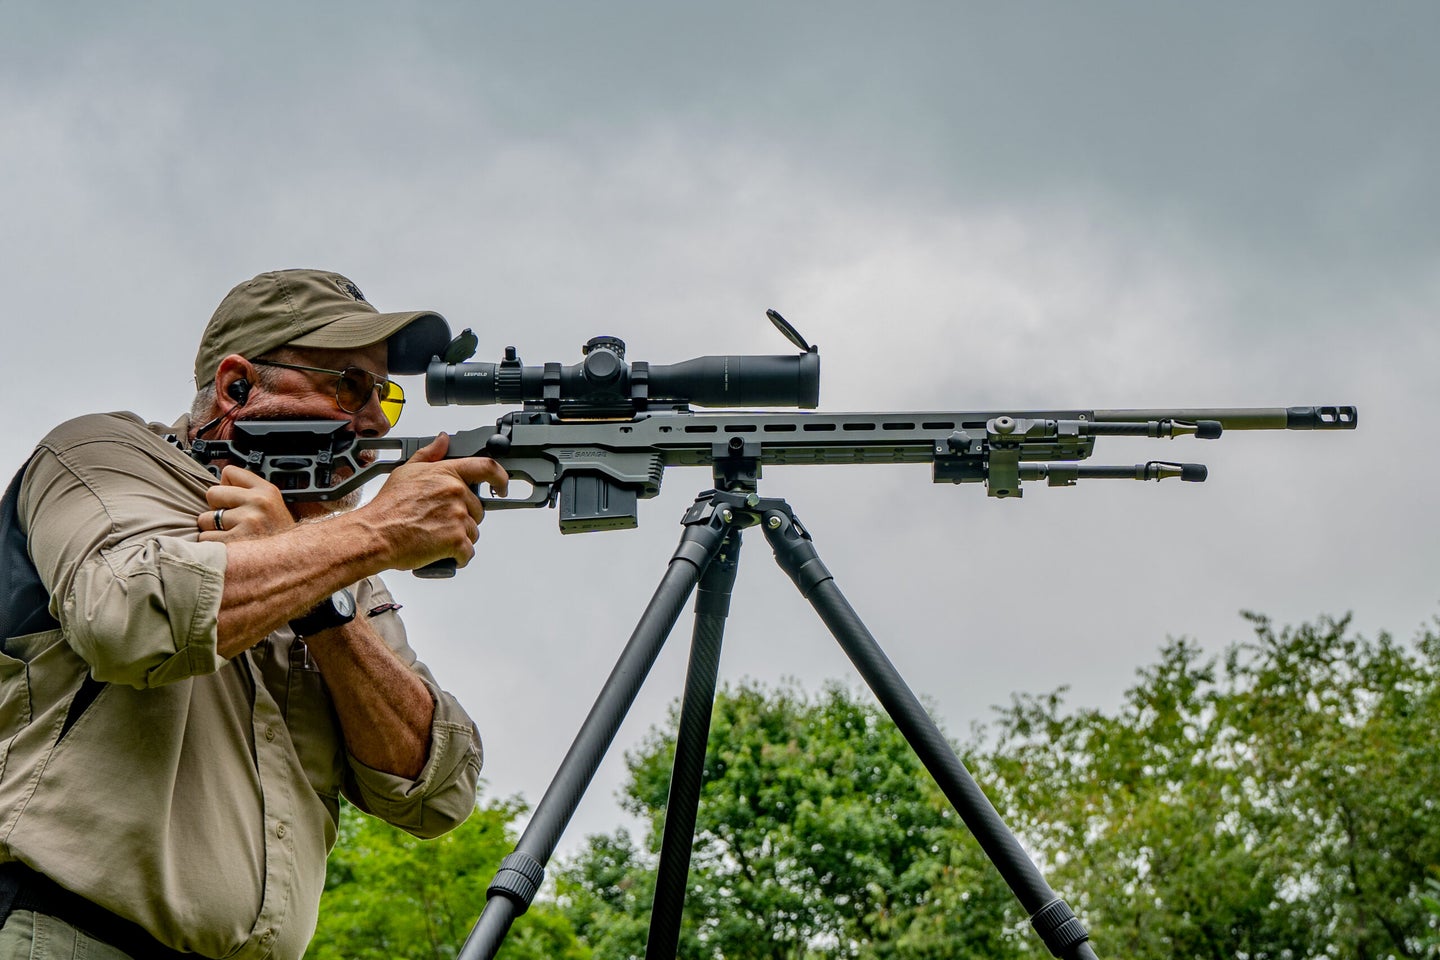 Applied Ballistics for Long Range Shooting : Understanding the